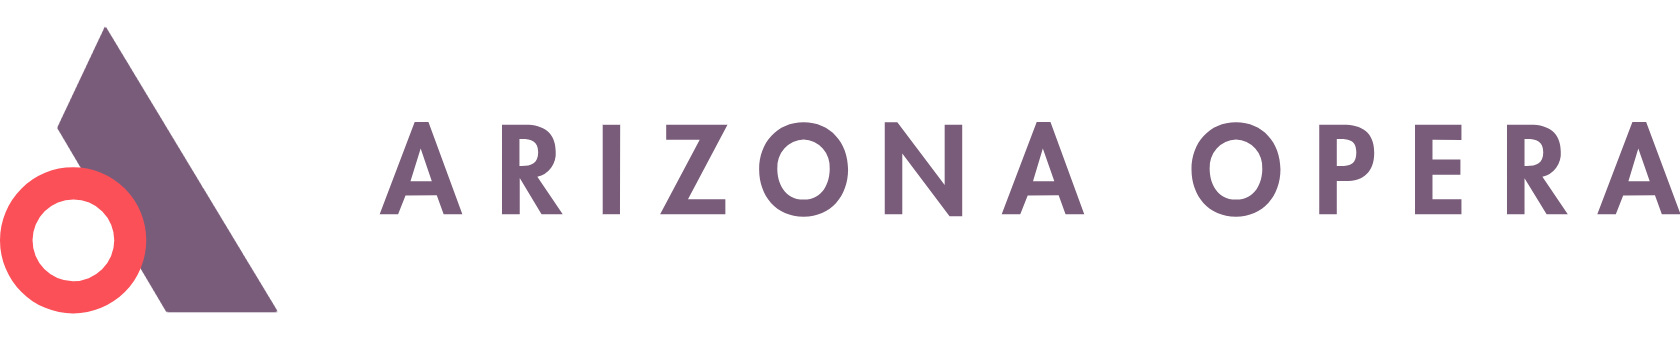 Arizona Opera Logo